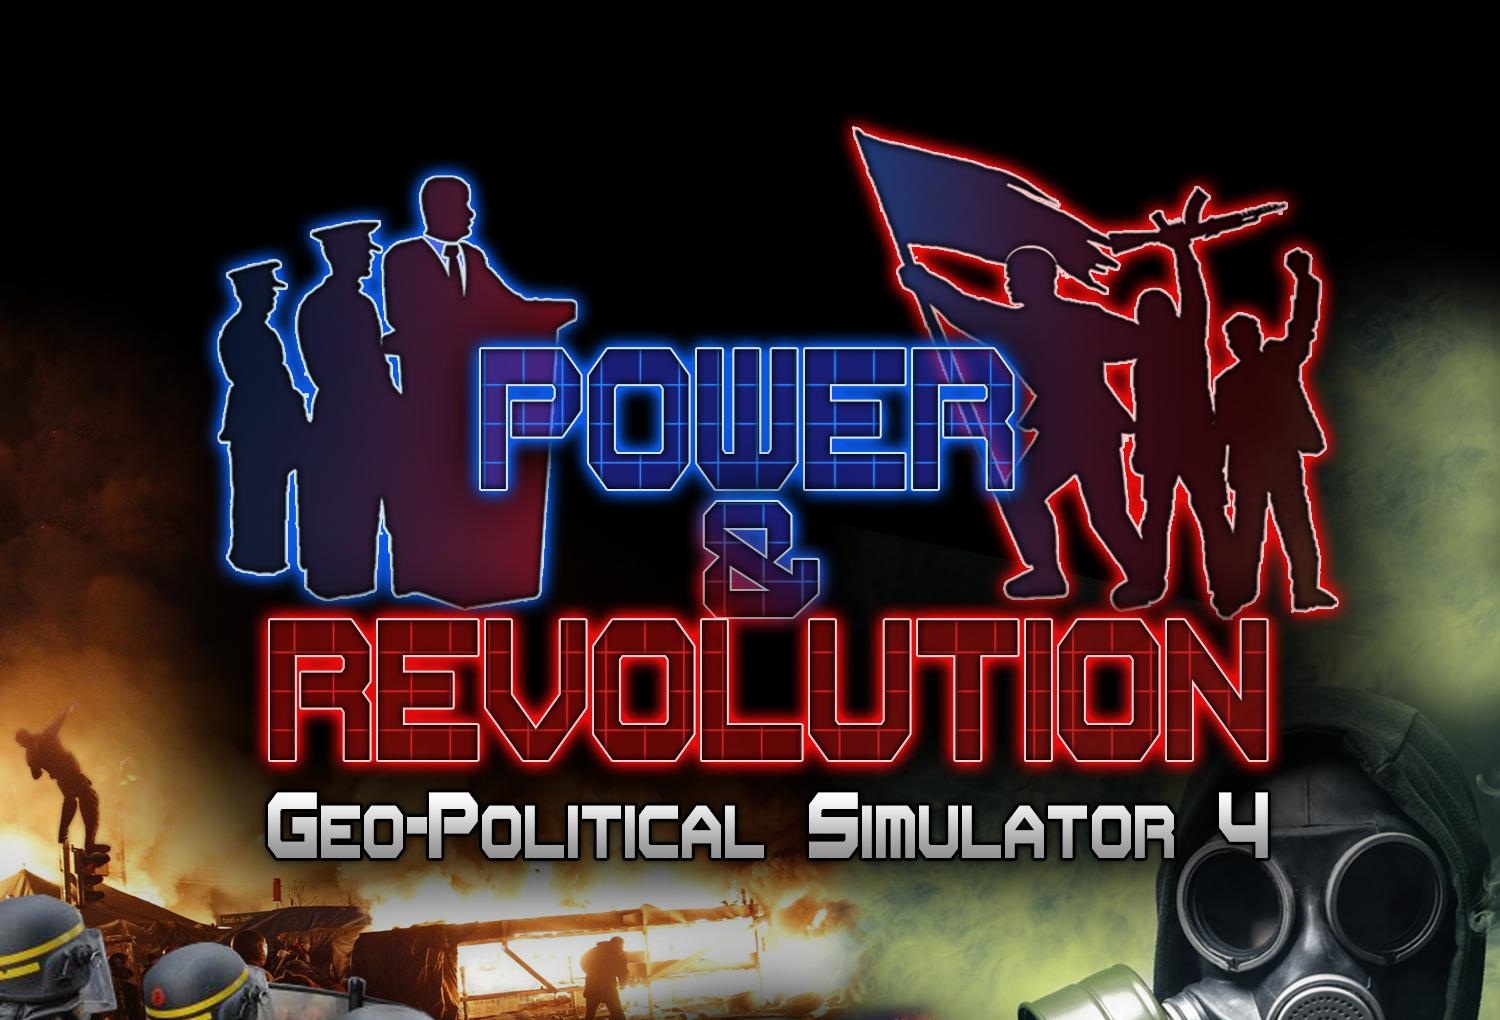 Power revolution geopolitical simulator